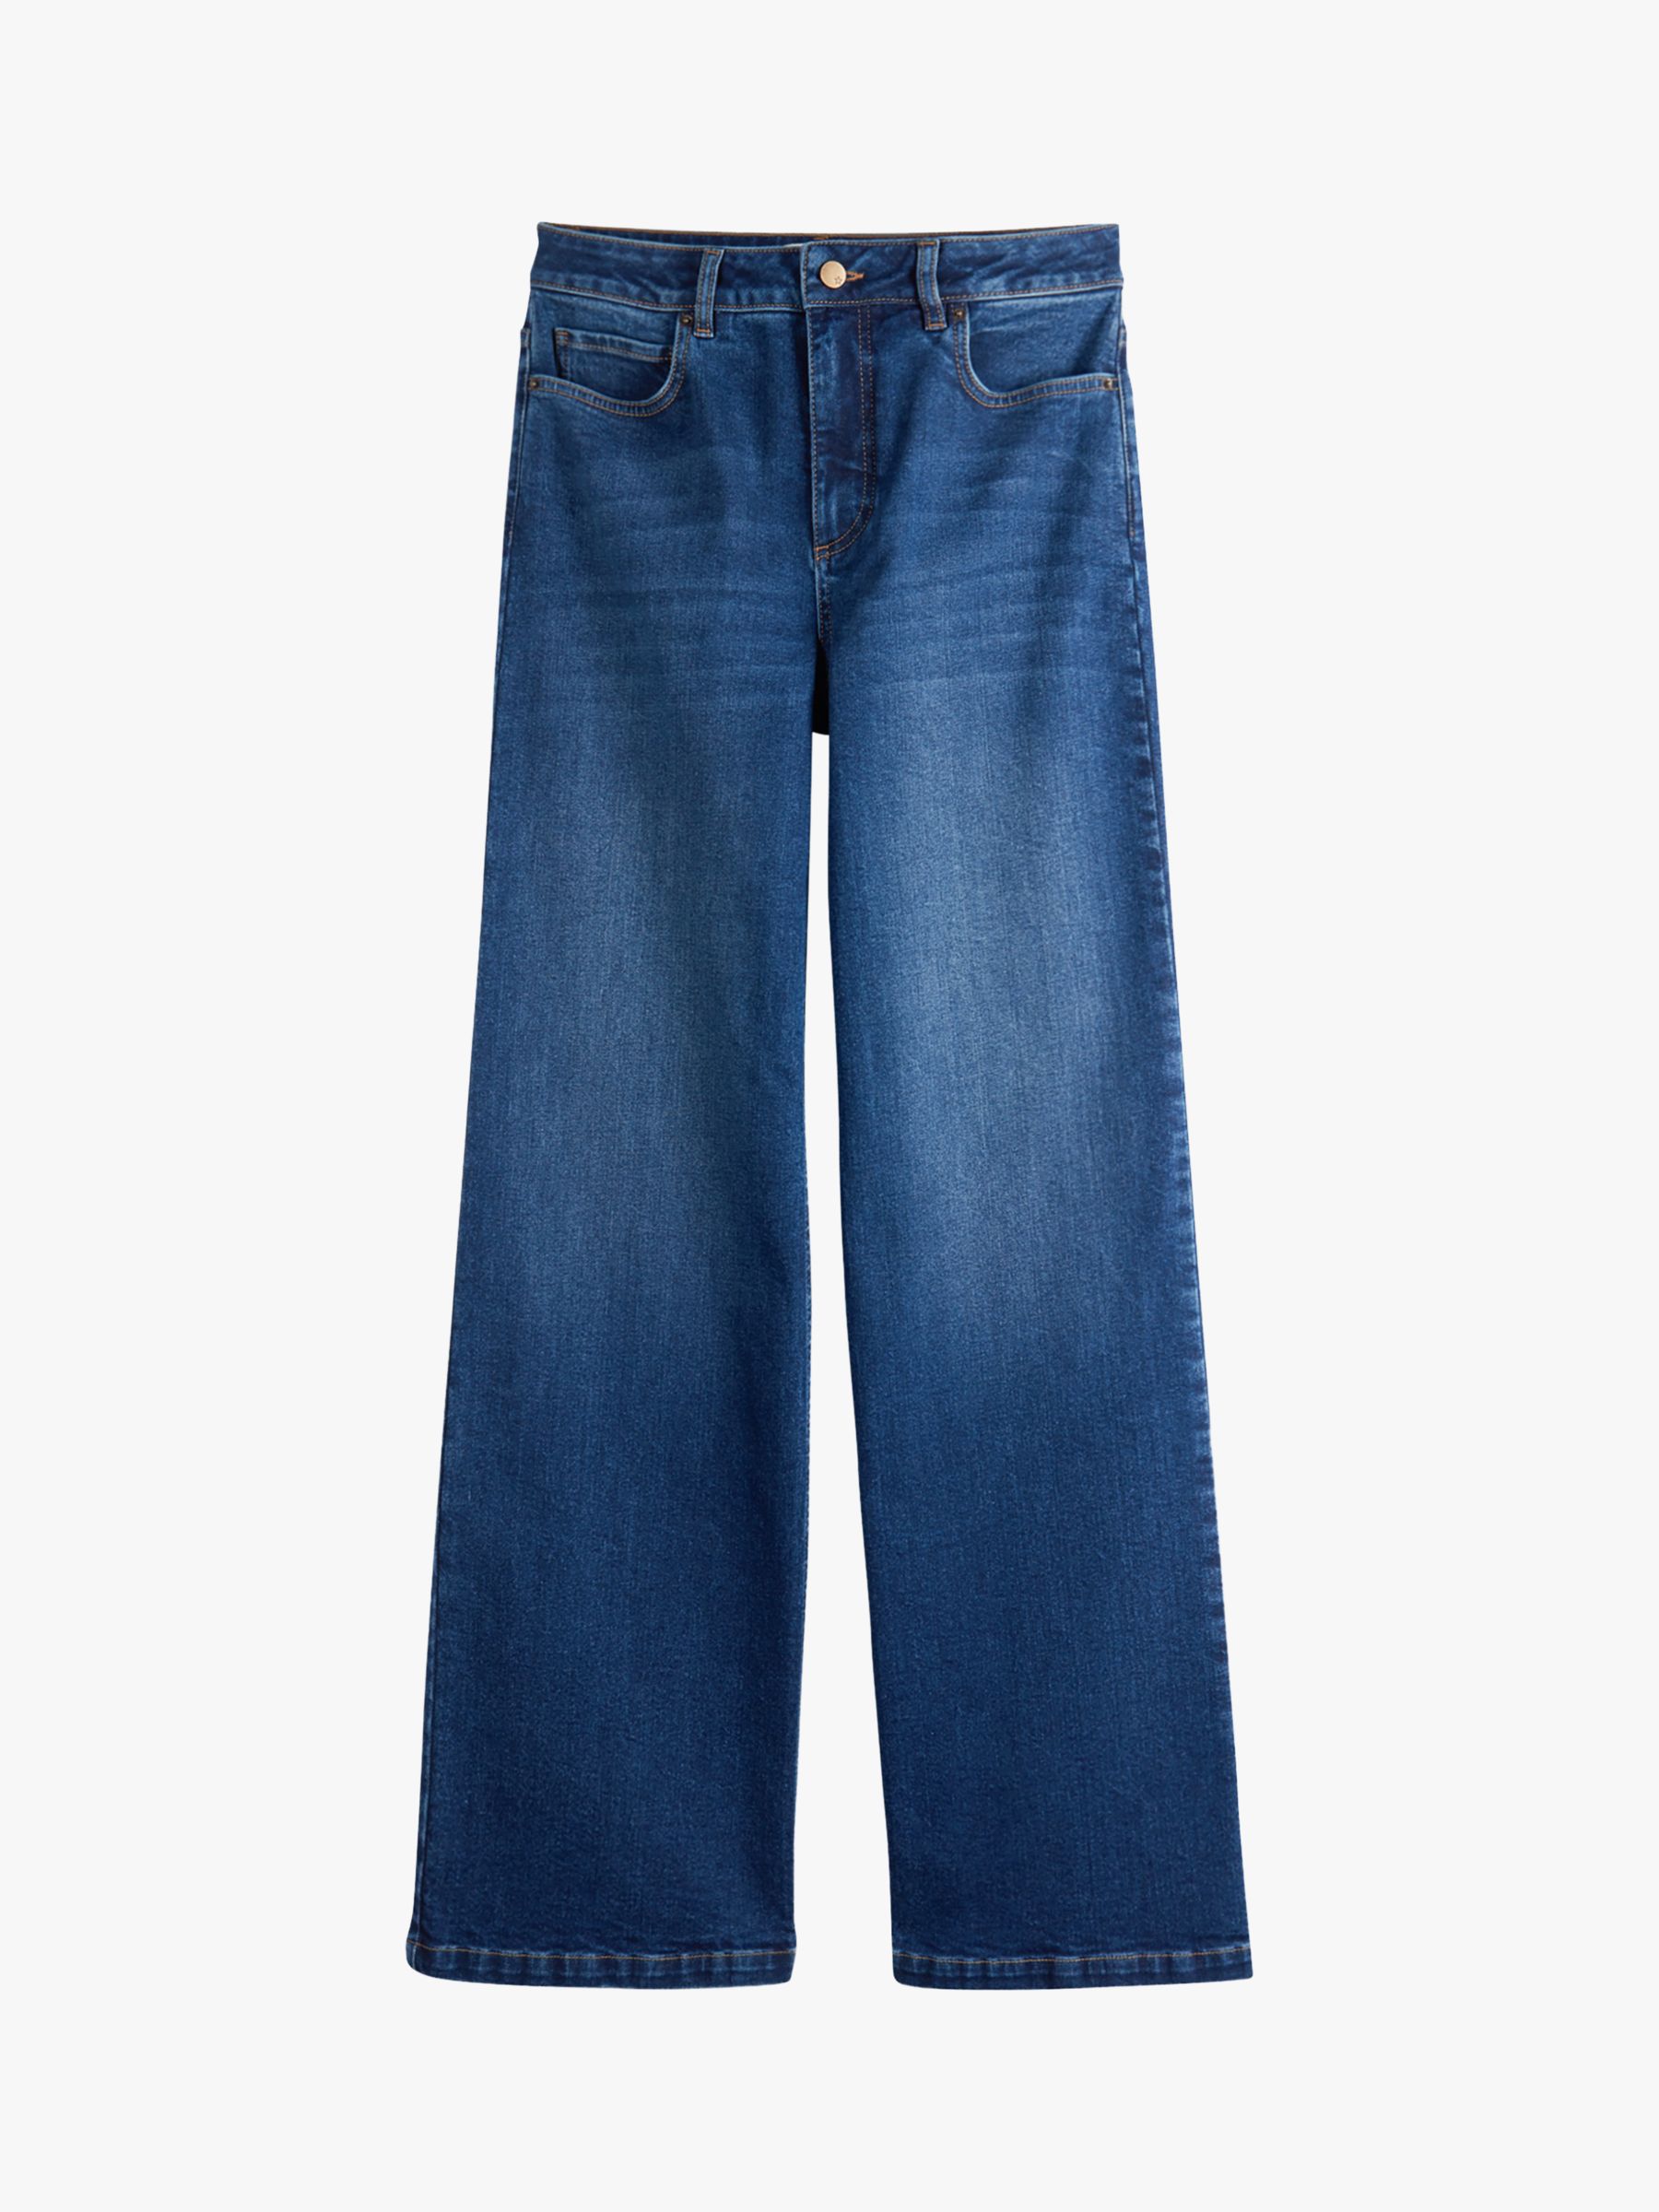 hush Rowan Flared Jeans, Dark Authentic at John Lewis & Partners